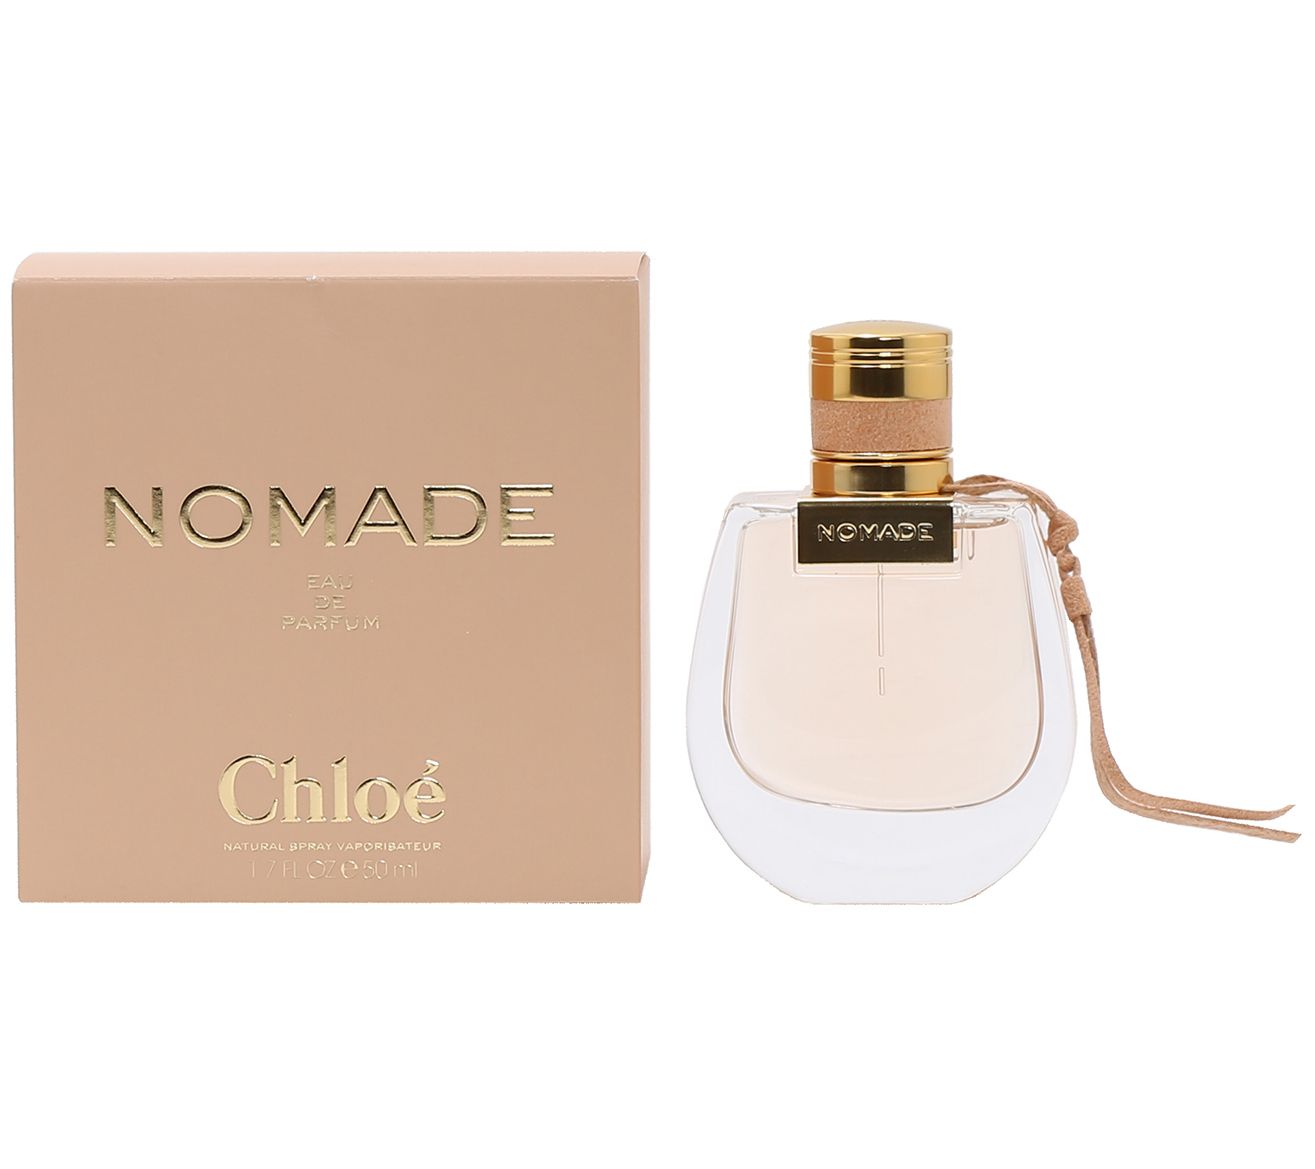 Chloe Nomade Ladies Eau oz Parfum Spray 1.7 de